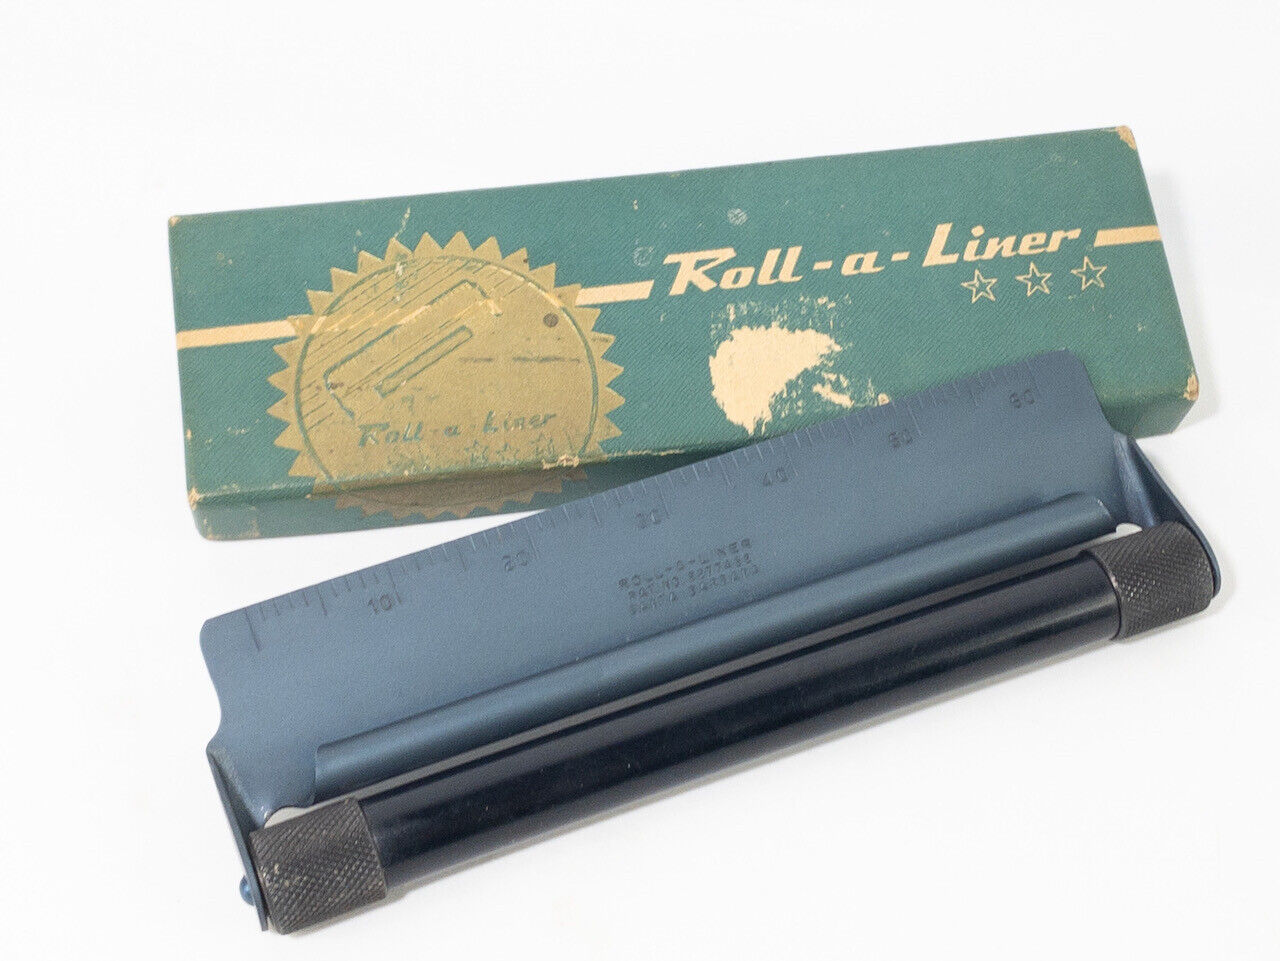 Vintage Roll-A-Liner Metal Ruler Used for Drafting & Design, w/ Original Box